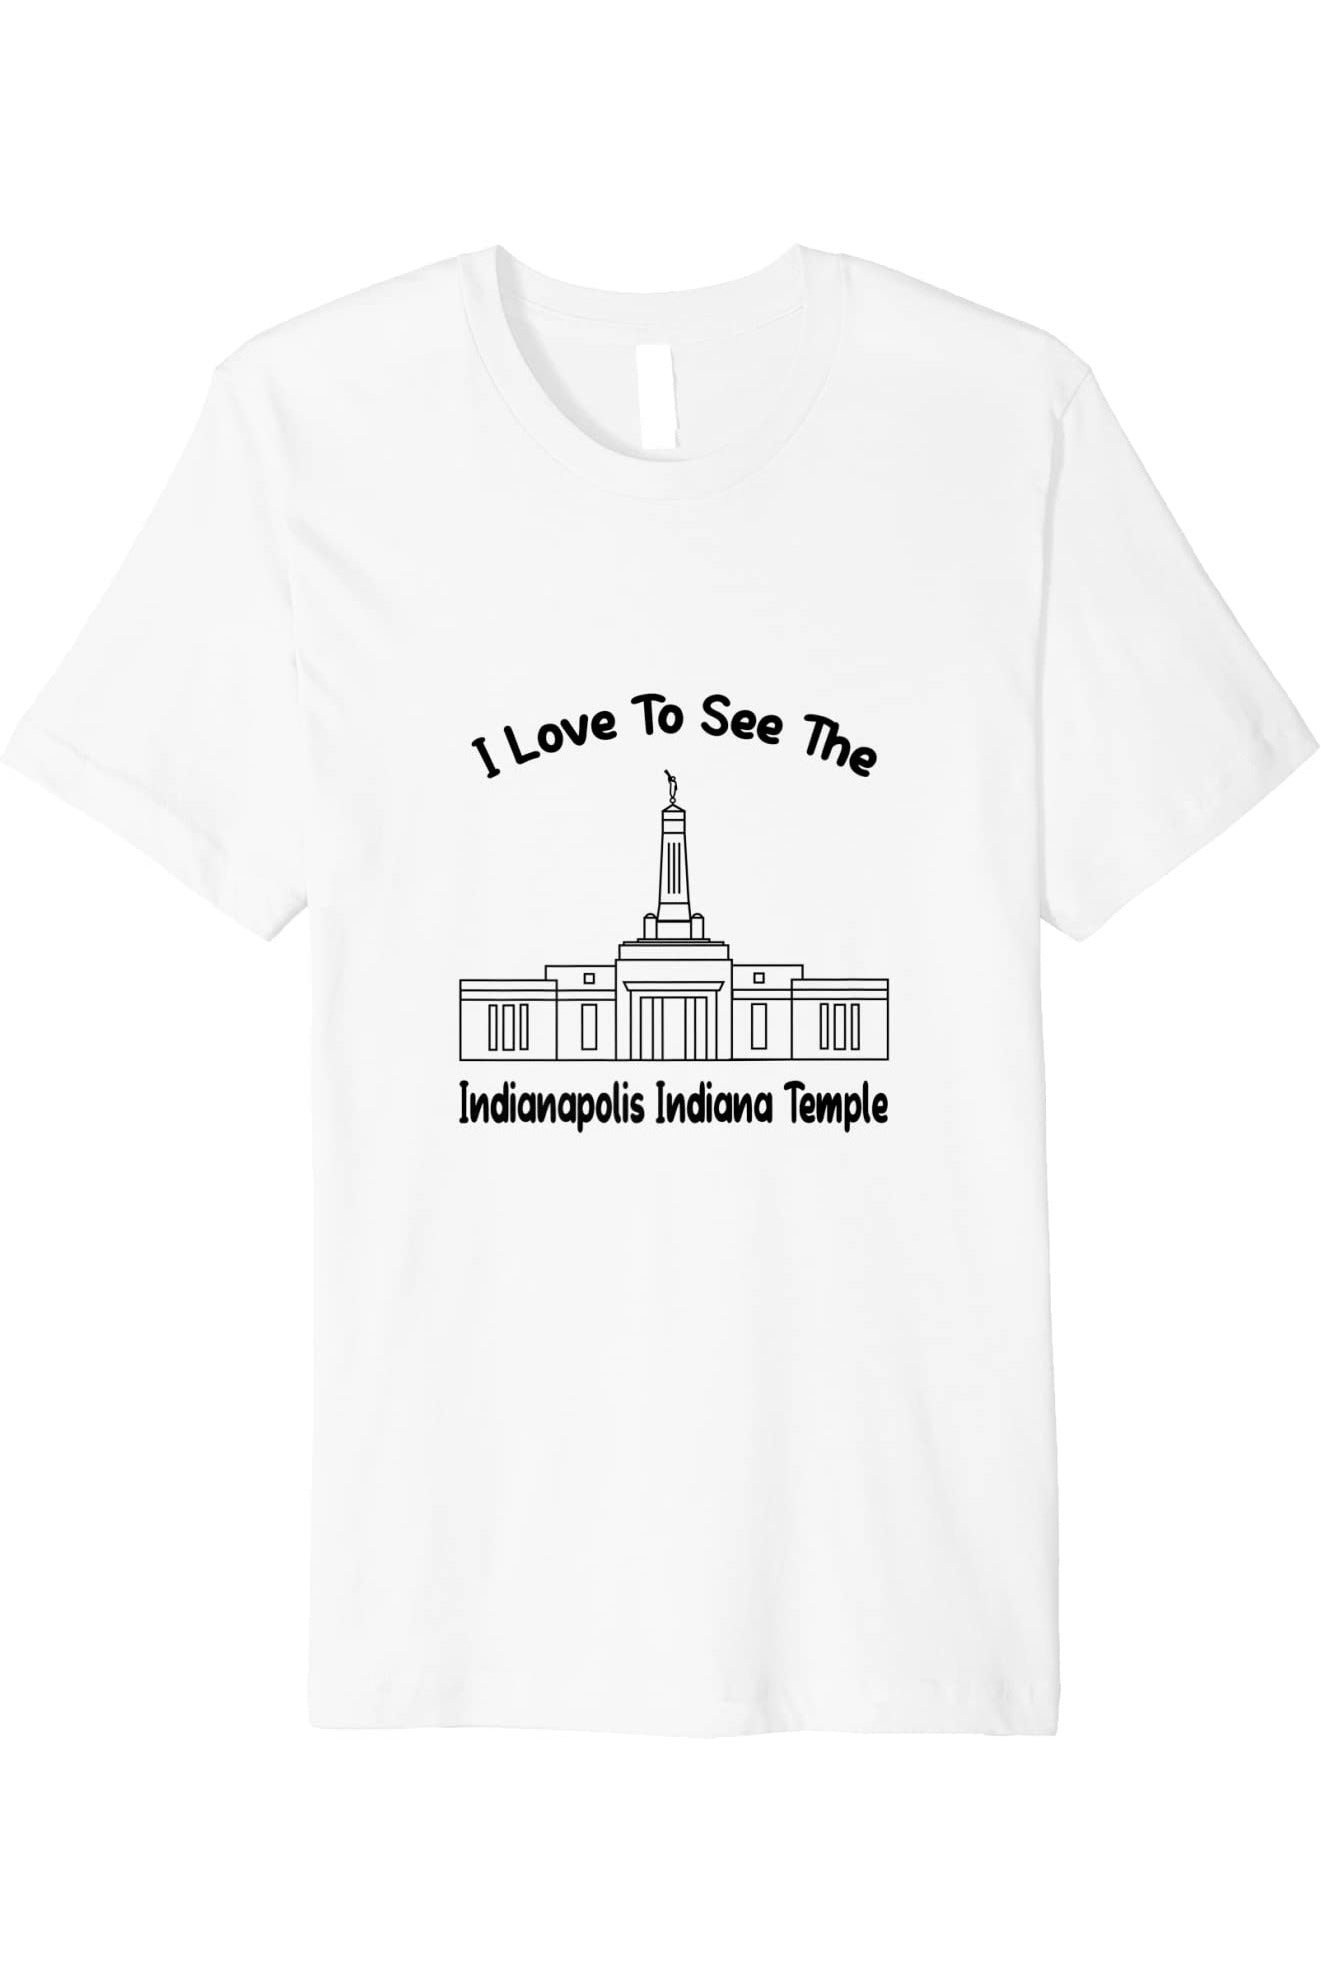 Indianapolis Indiana Temple T-Shirt - Premium - Primary Style (English) US